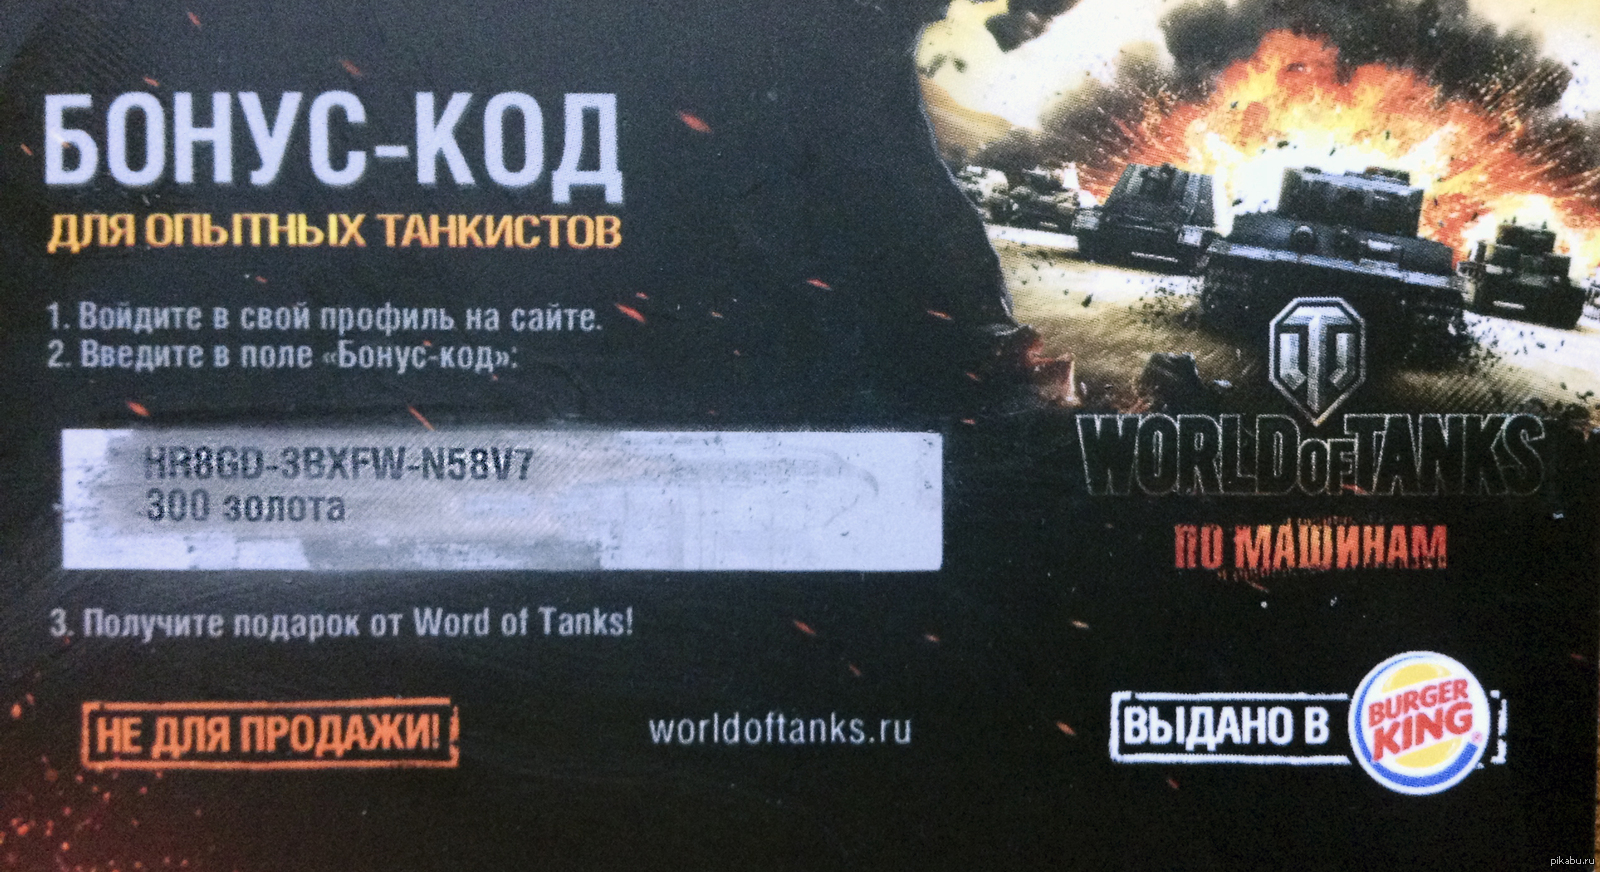 World of tanks коды 2020. Бонус код. WOT бонус код. Бонус код на танки. Бонусные коды для World of Tanks.